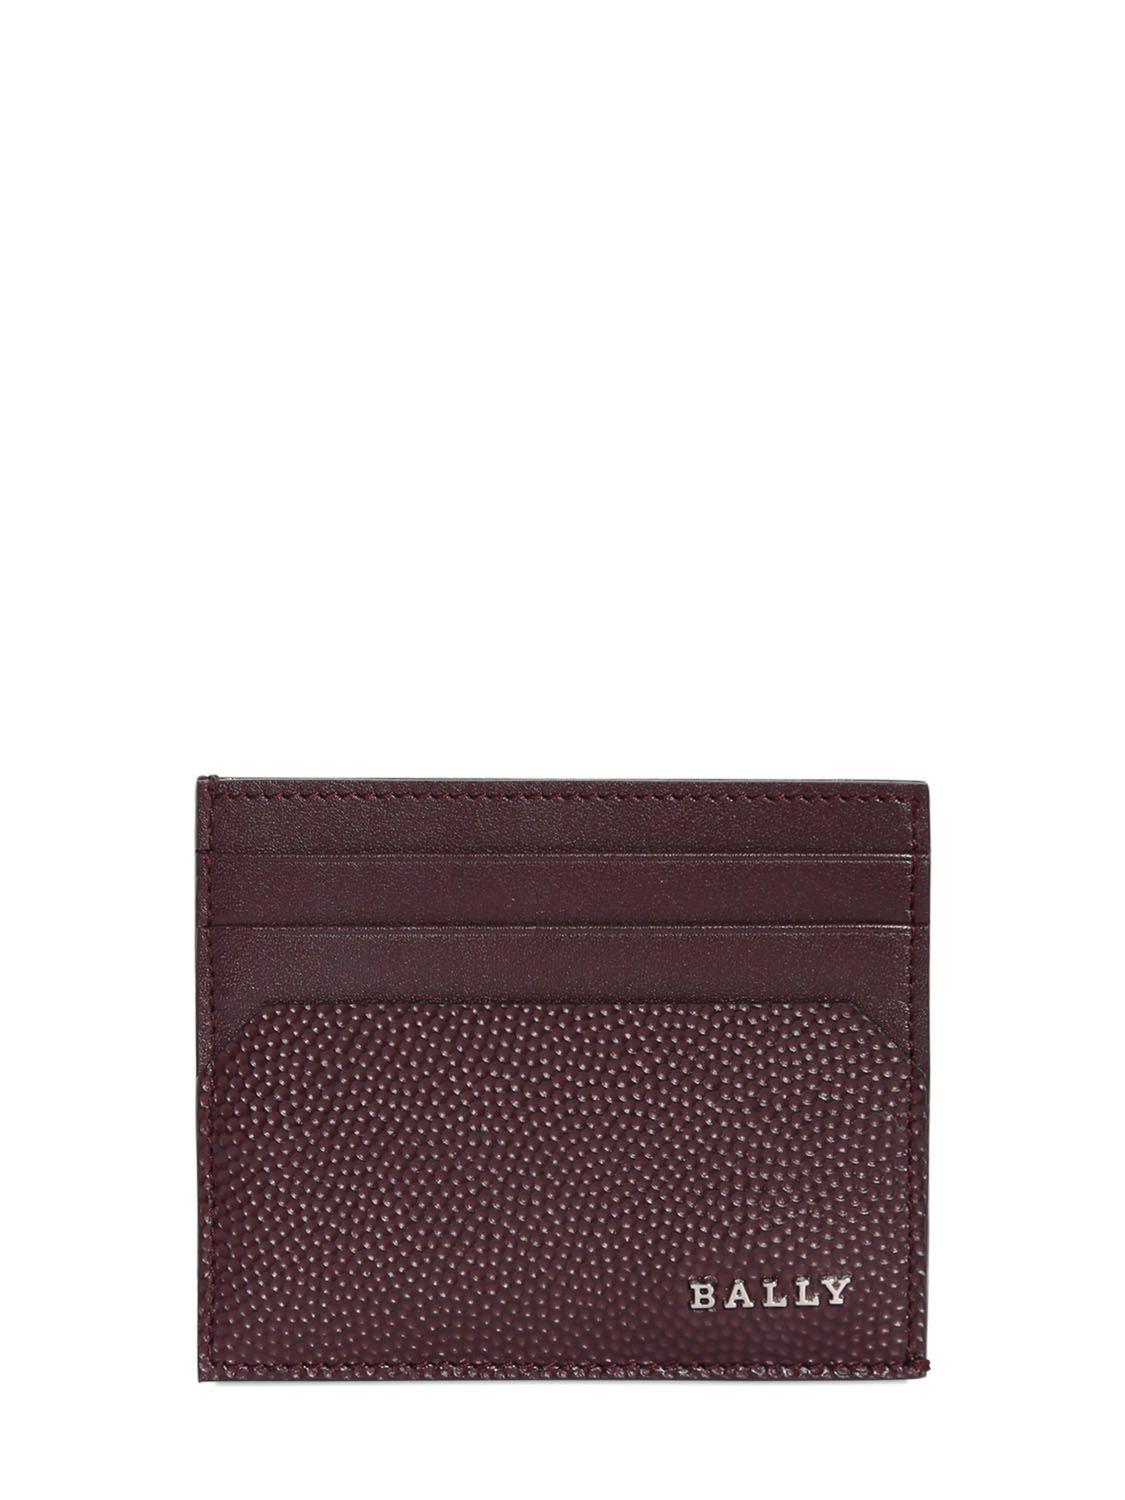 Bally Shoes Logo - bally logo detail leather card holder bordeaux men accessories, bally